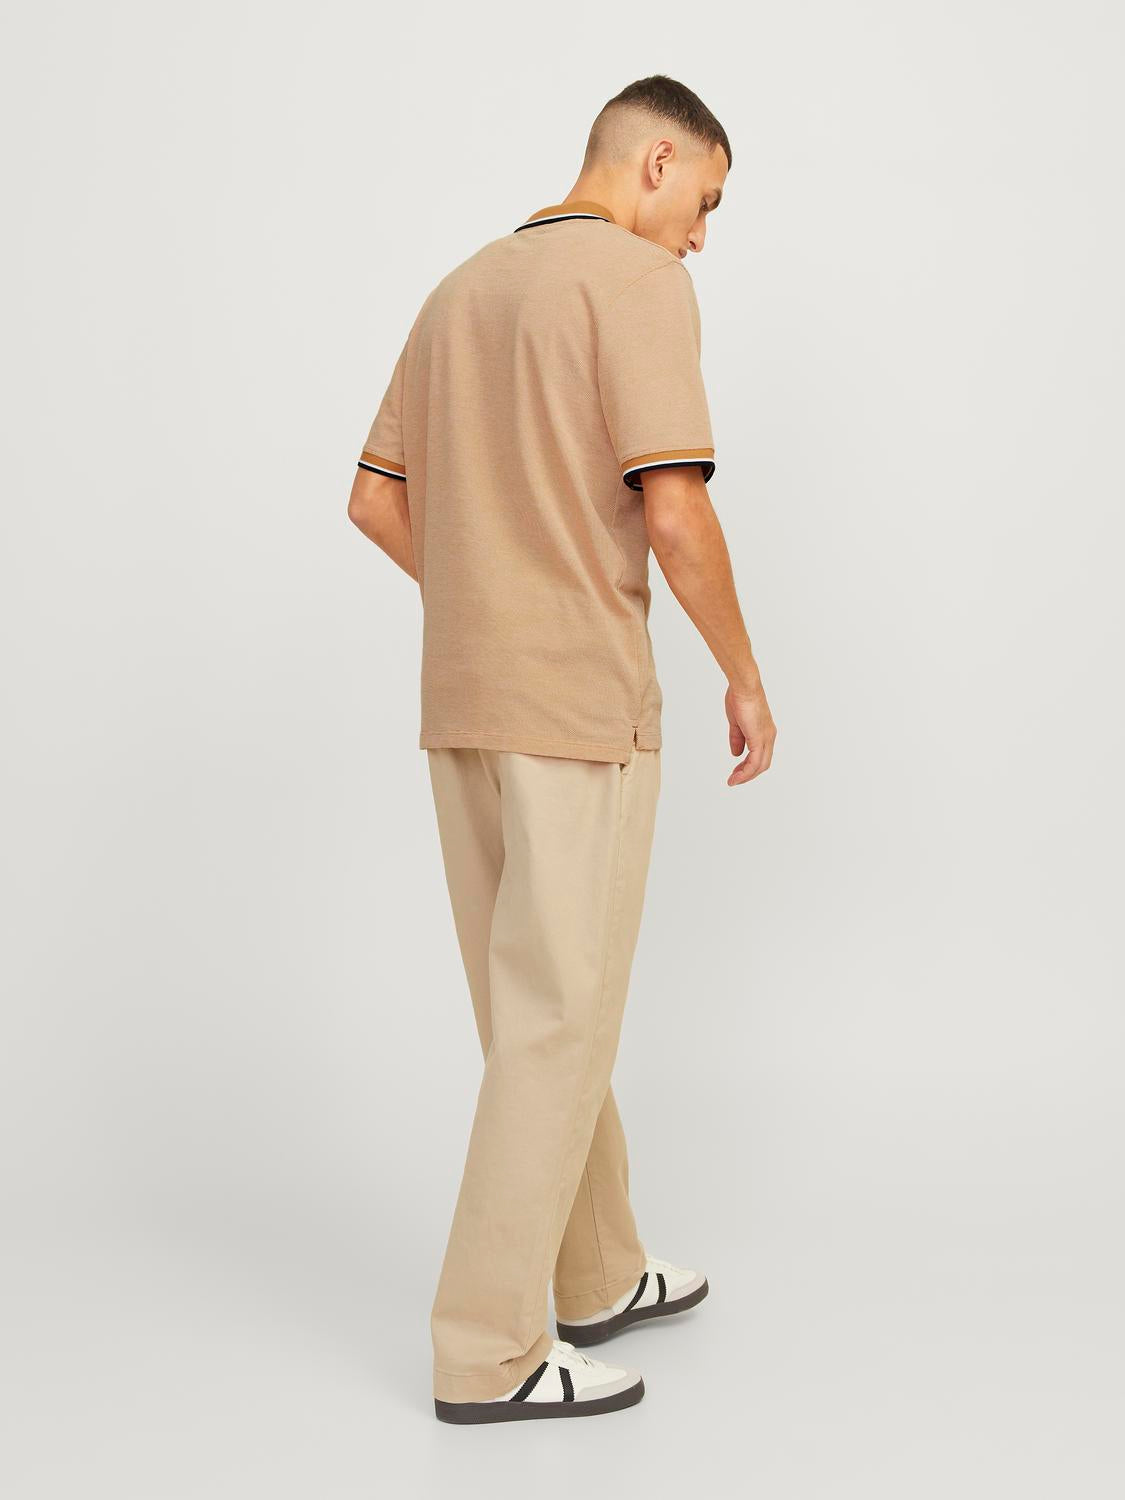 JPRBLUWIN Polo Shirt - Nugget